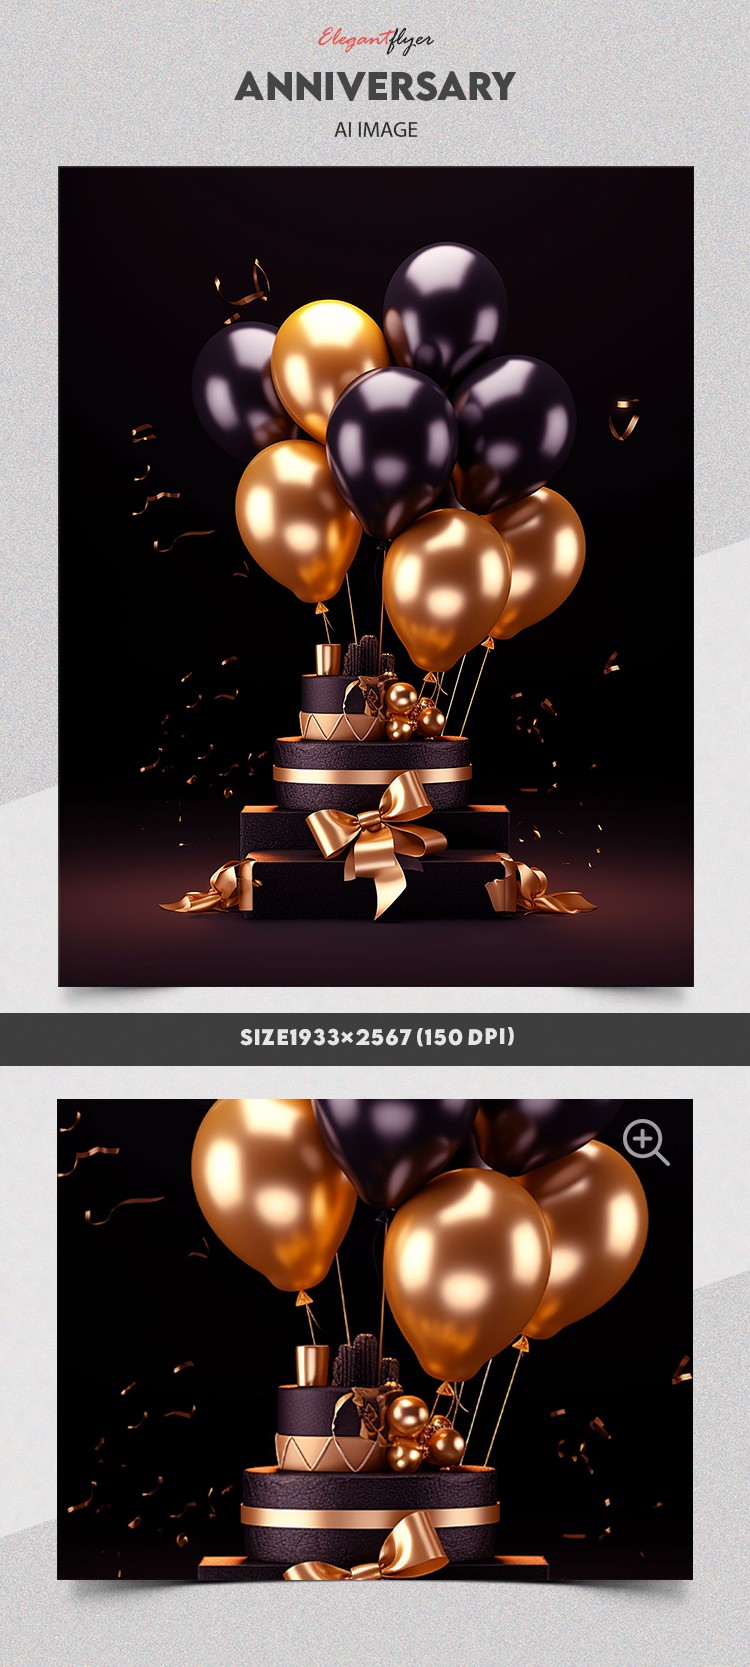 Luxury Anniversary with Balloons by ElegantFlyer